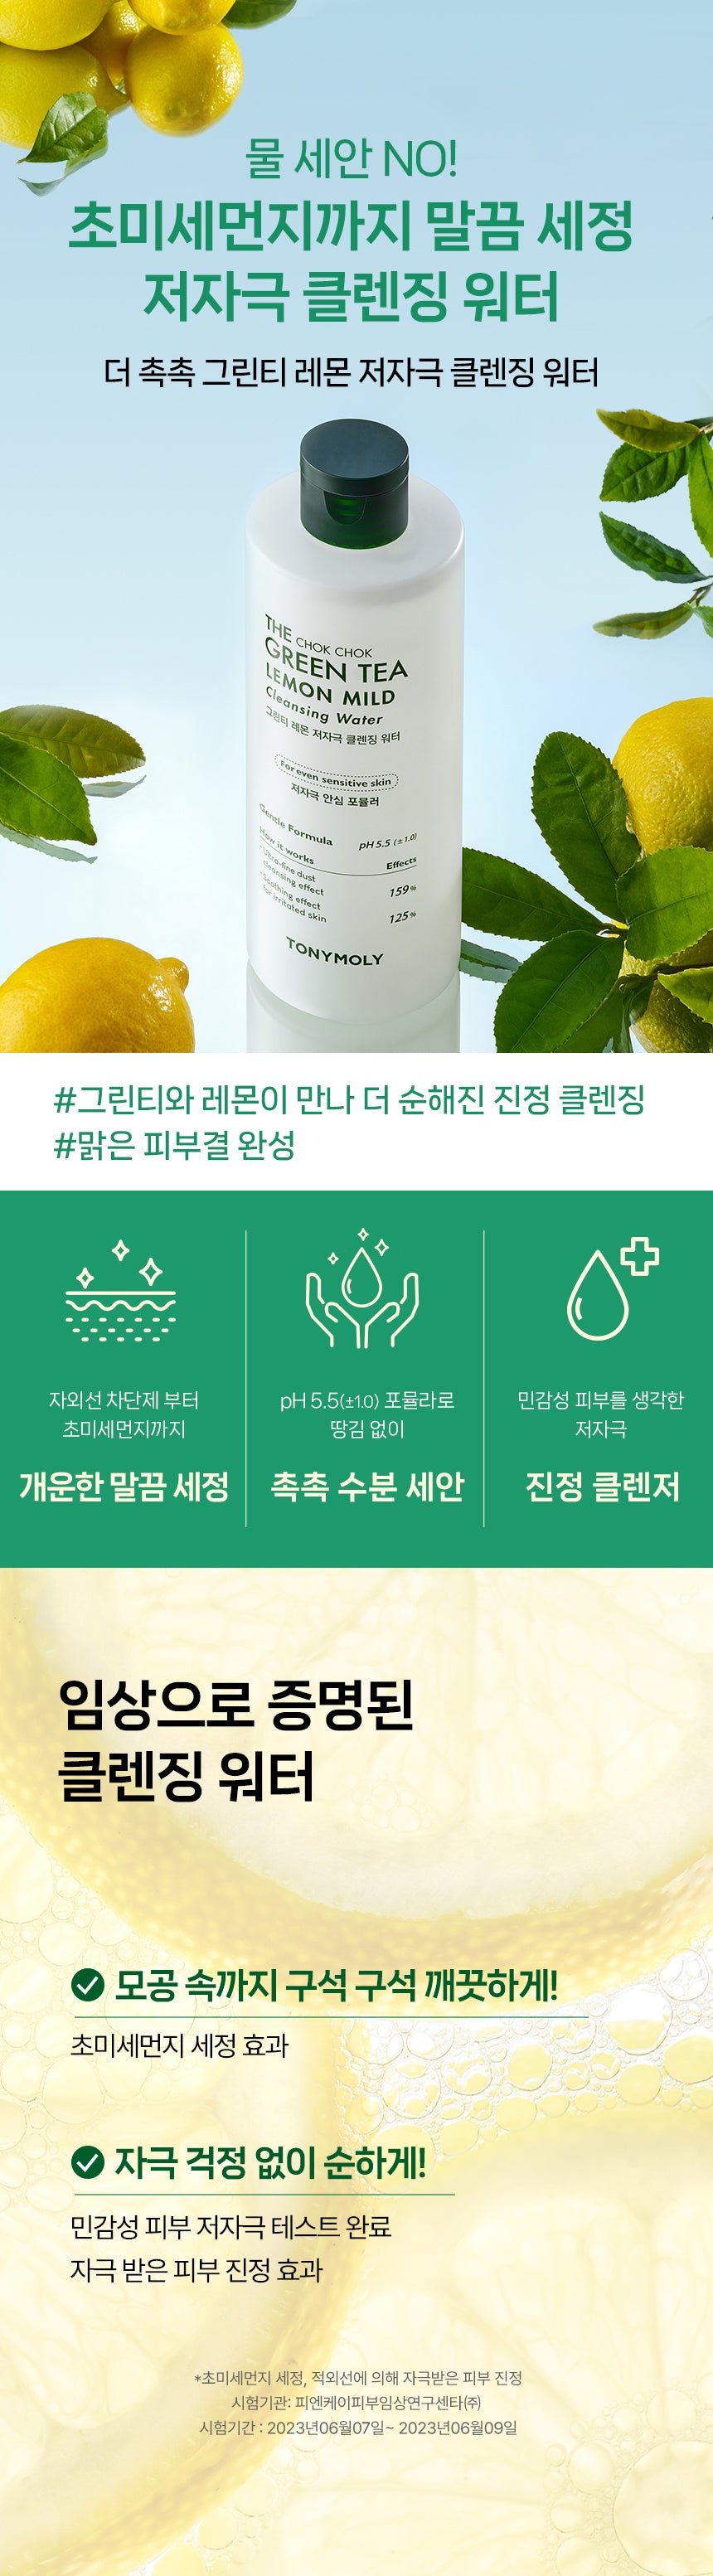 Tonymoly_The Chok Chok Green Tea Lemon Mild Cleansing Water 300ml_1